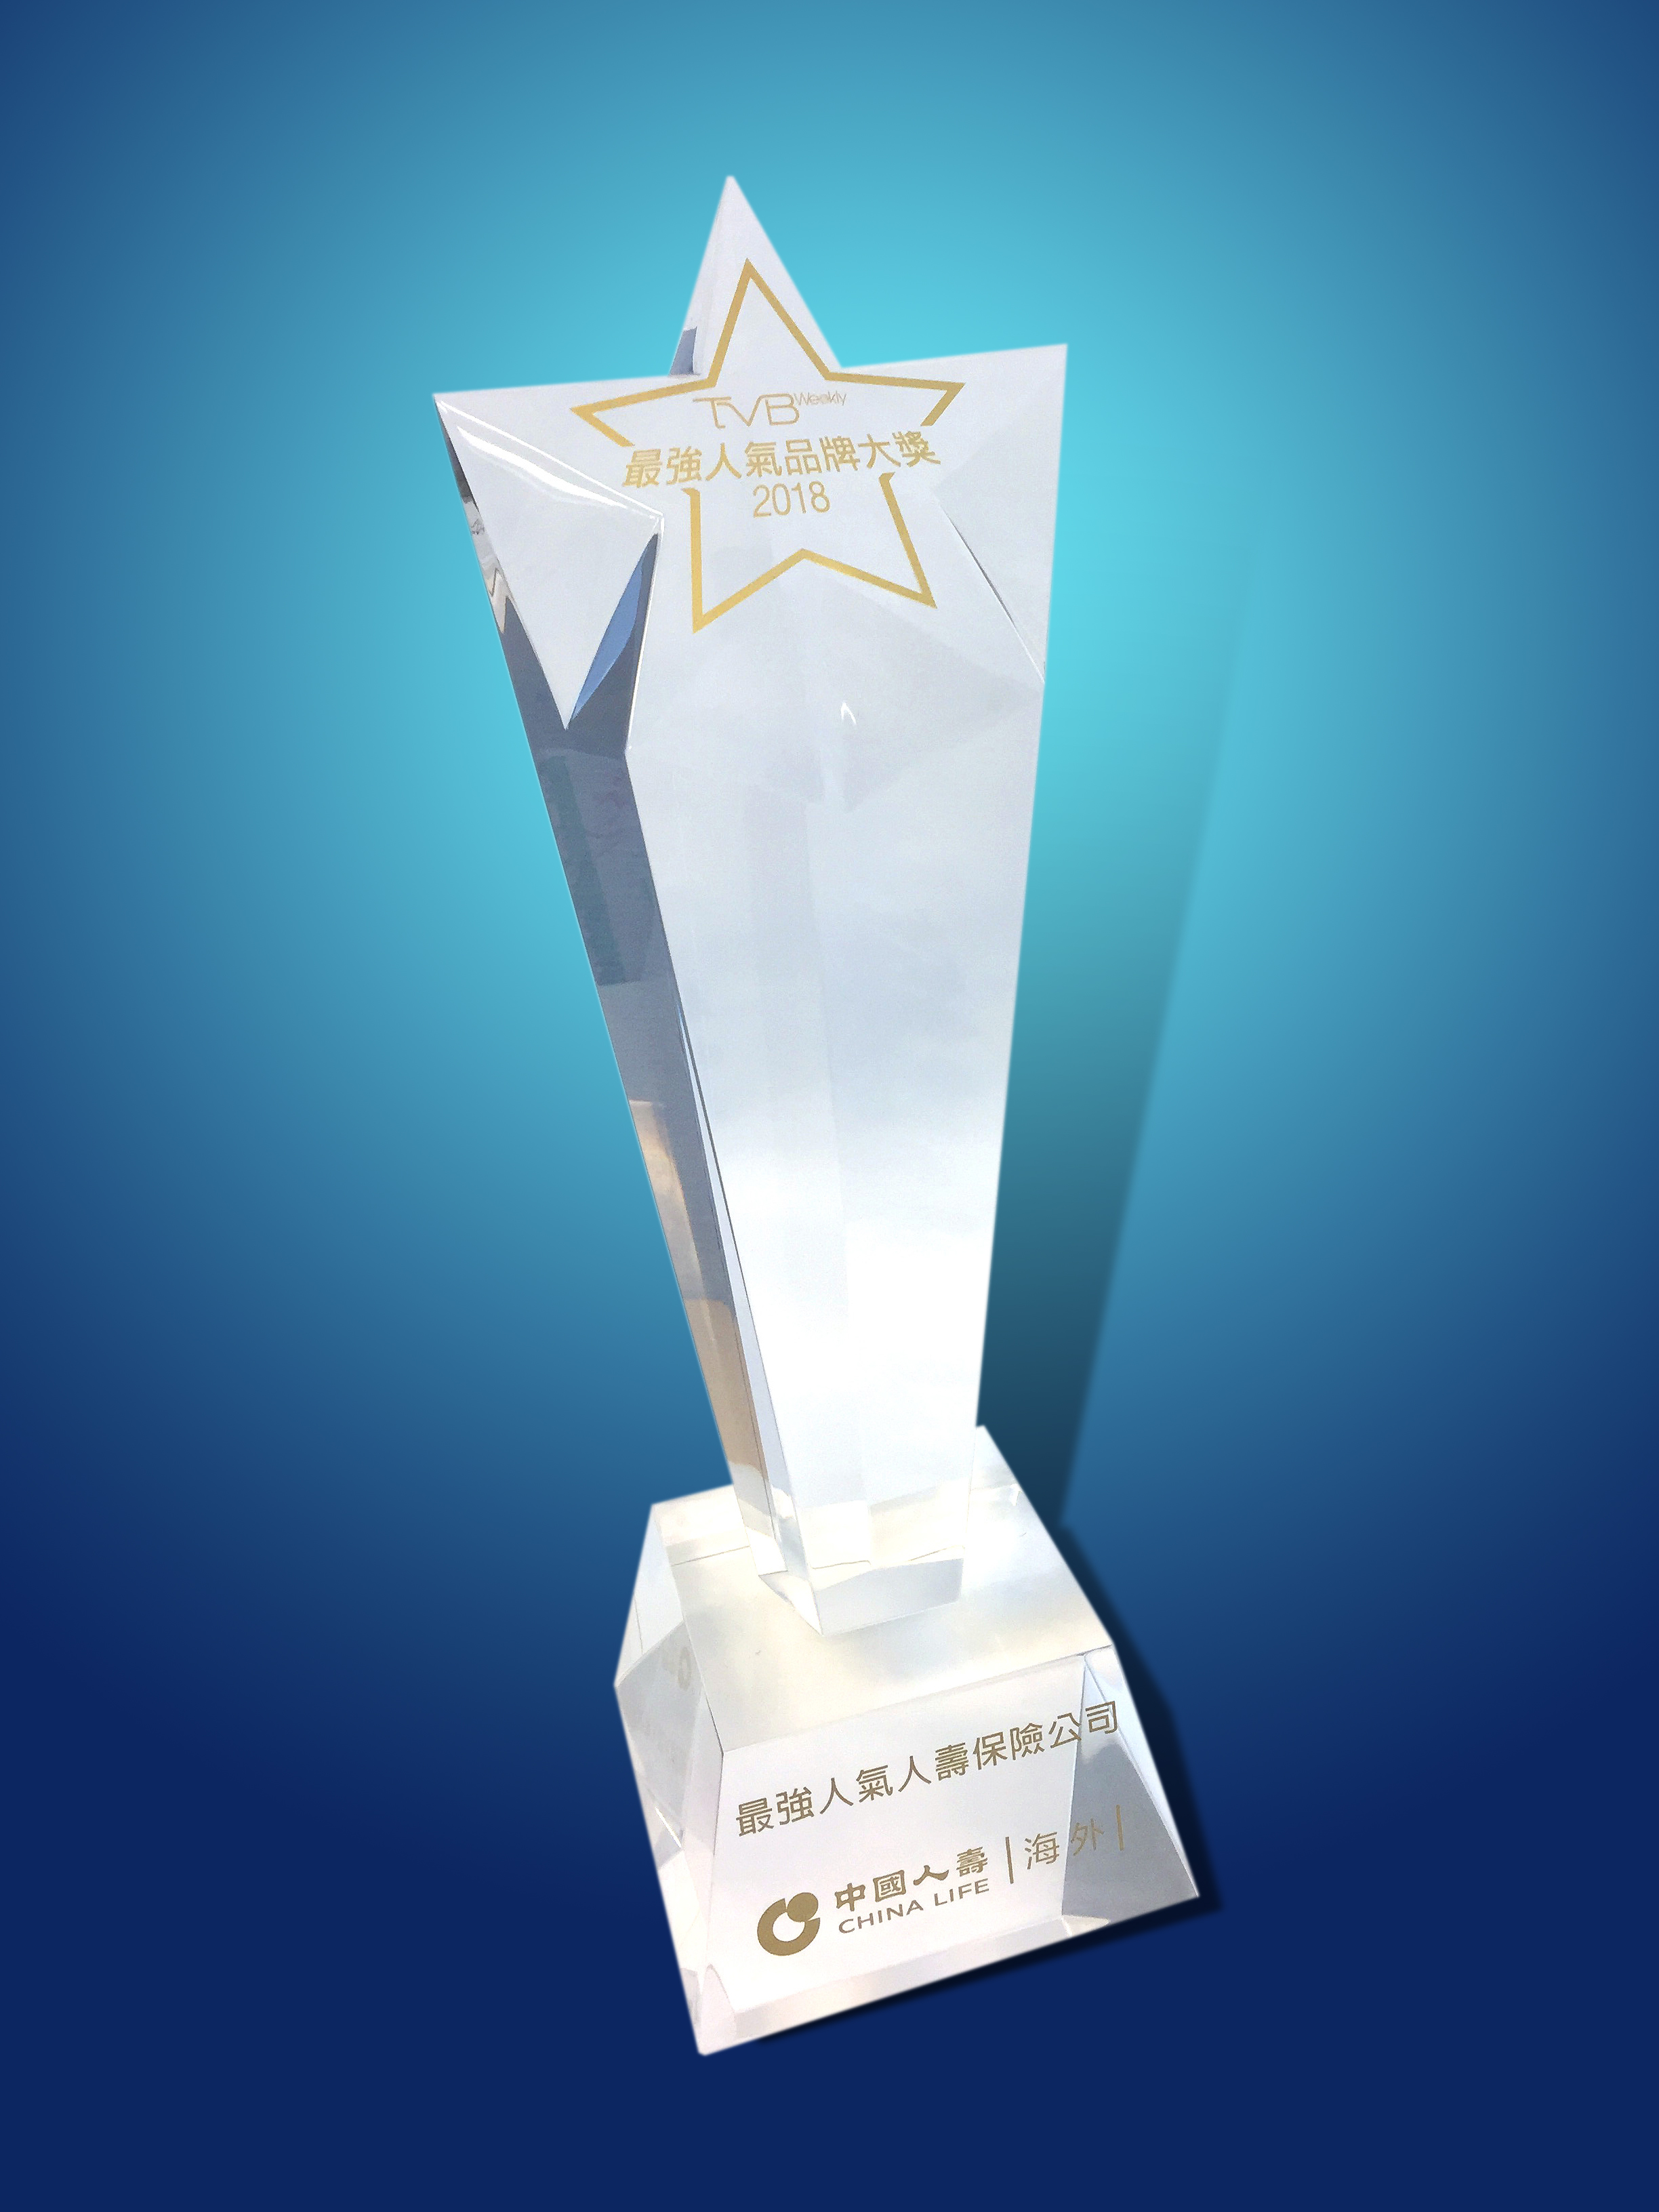 China Life (Overseas) awarded “2018 TVB Weekly Brand Award – Life Insurance Company” for four years in a row